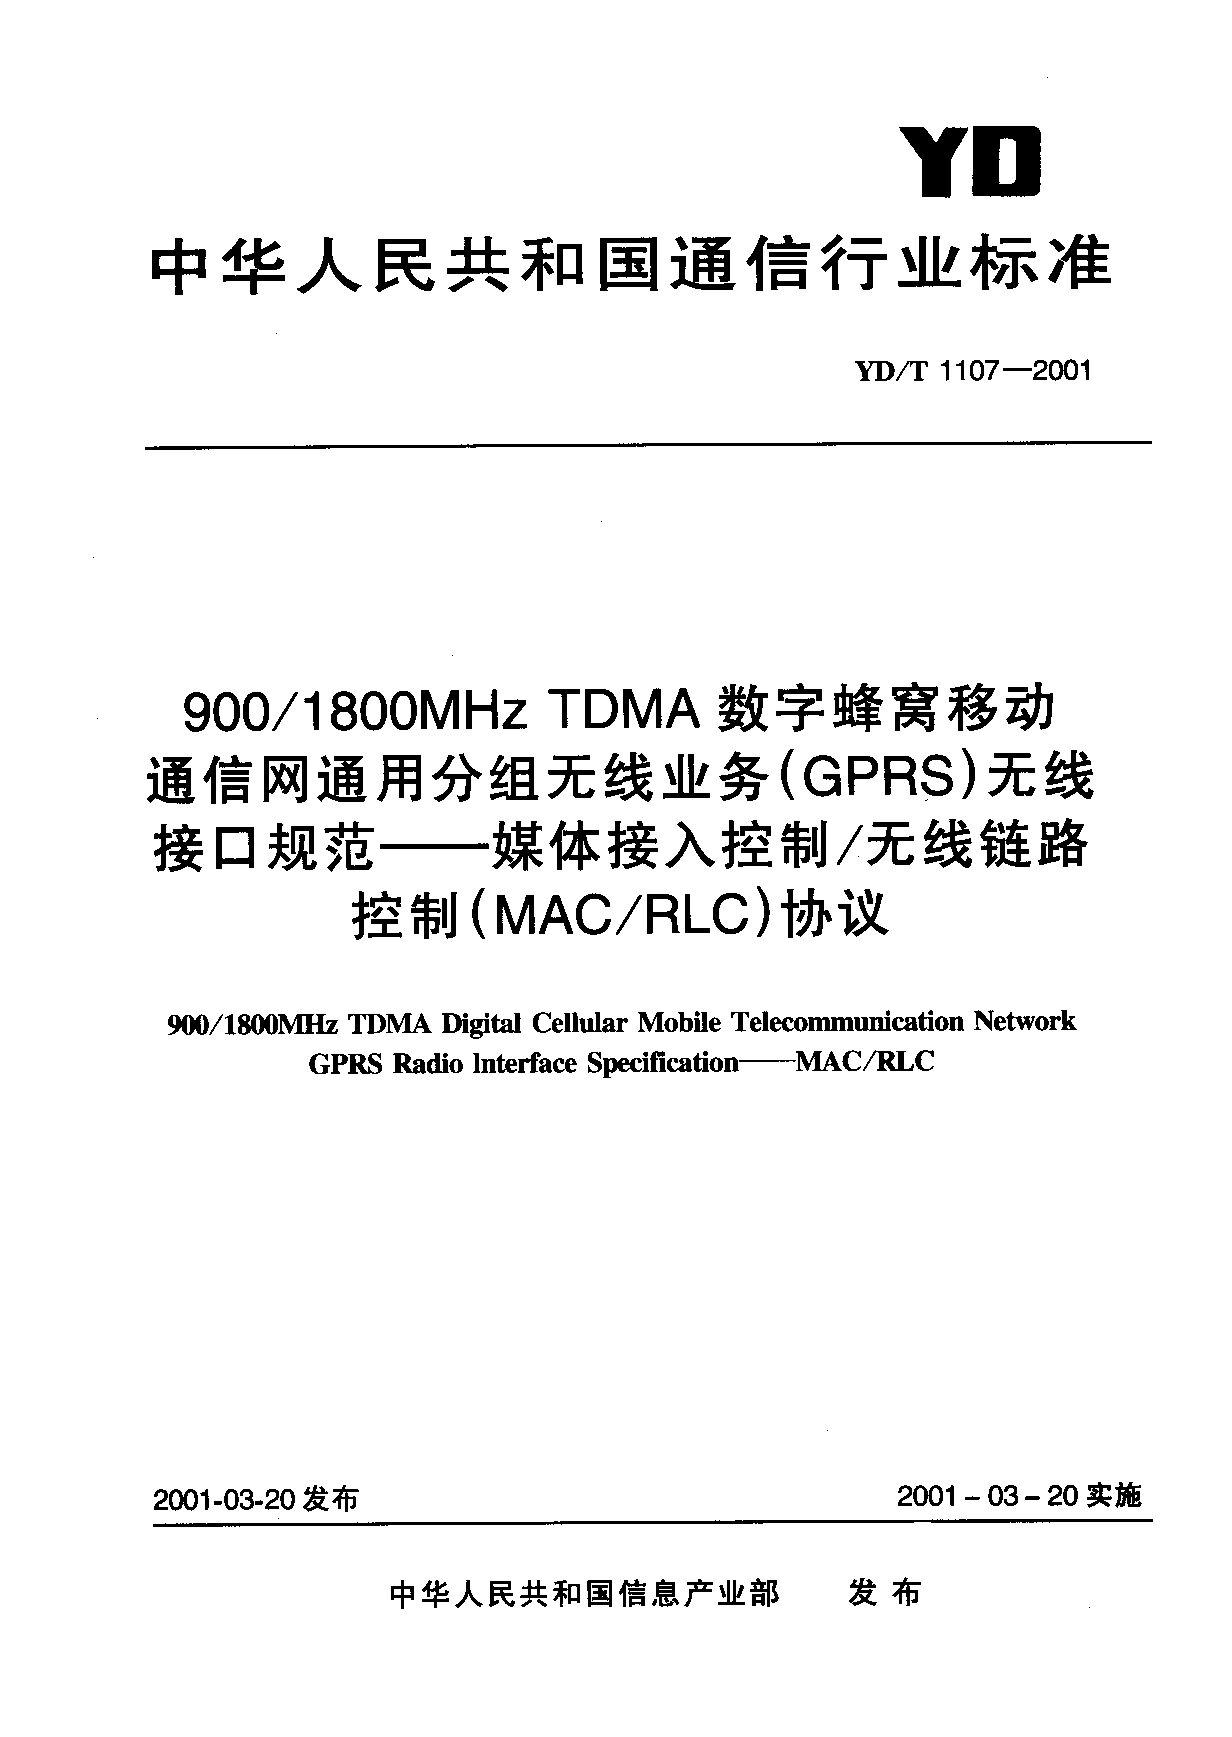 YD/T 1107-2001封面图